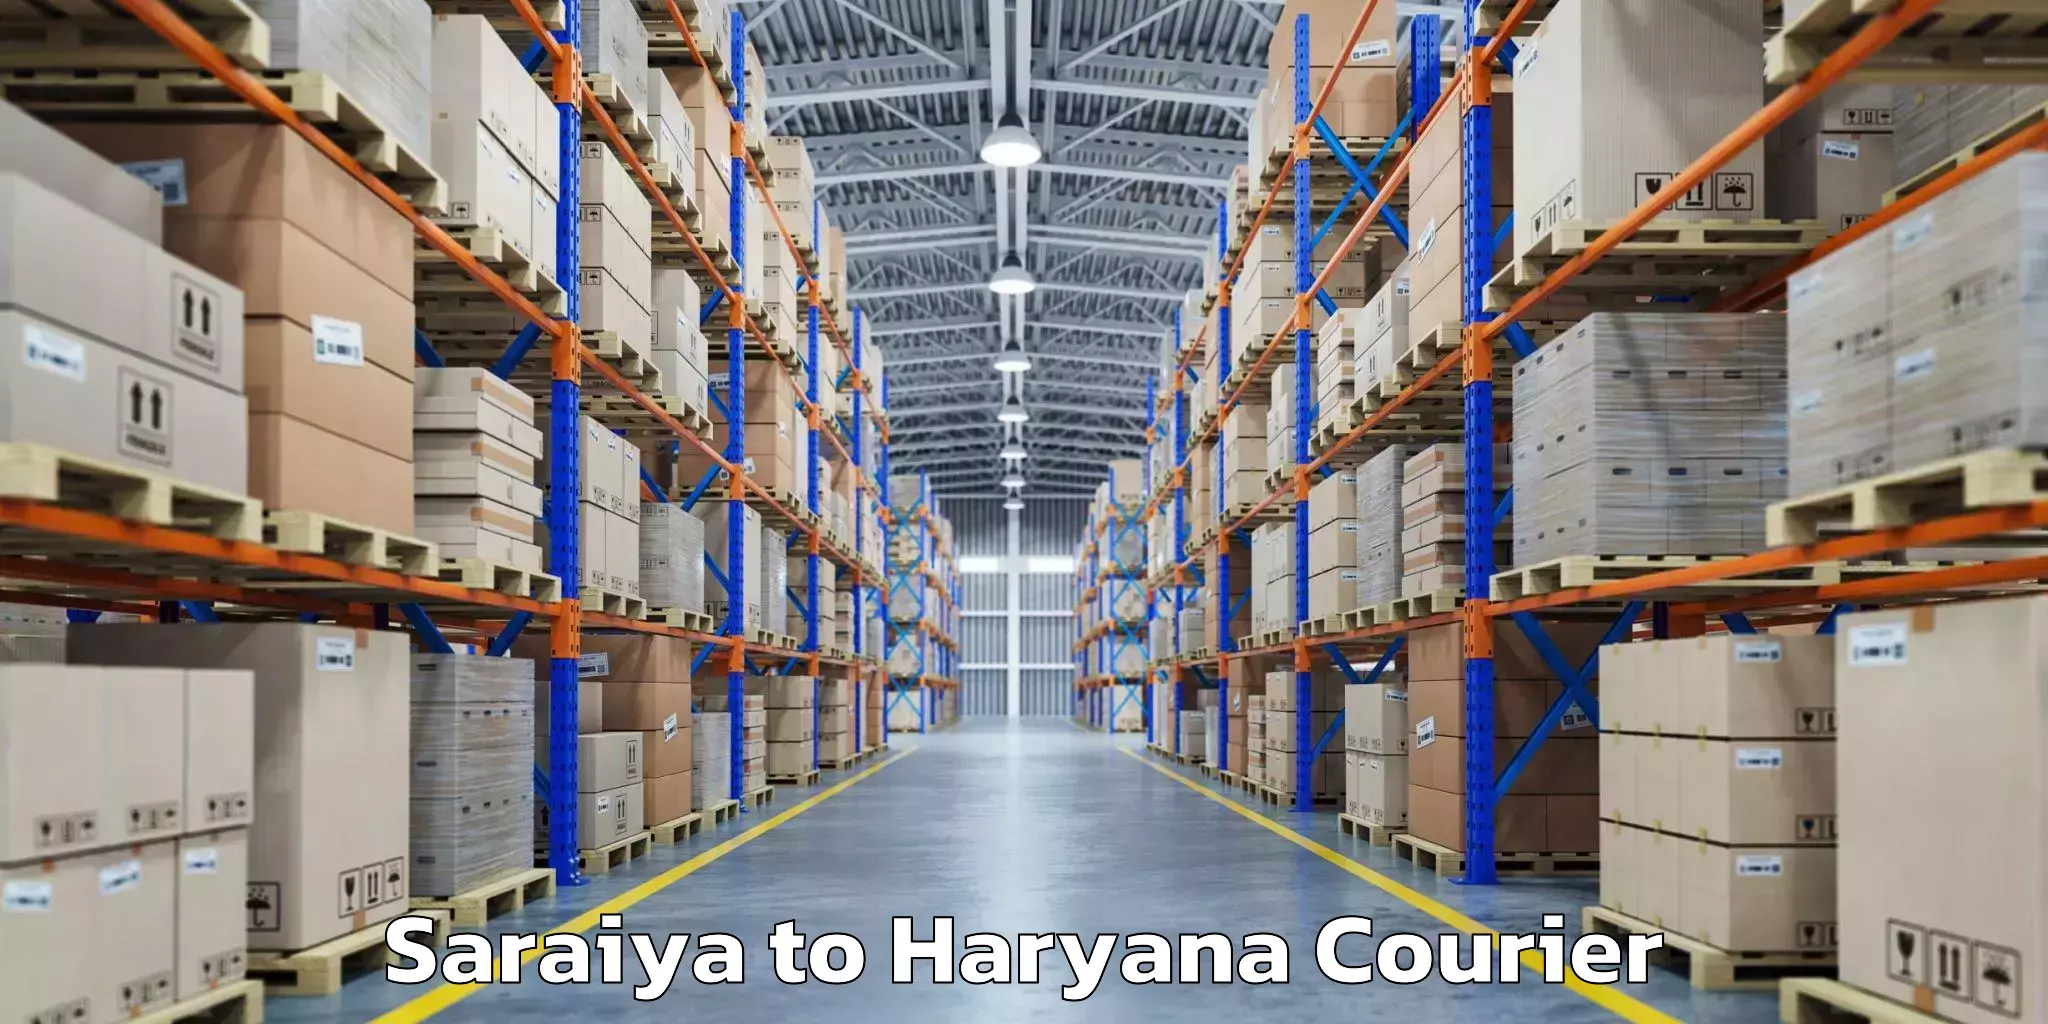 Luggage delivery network Saraiya to NCR Haryana